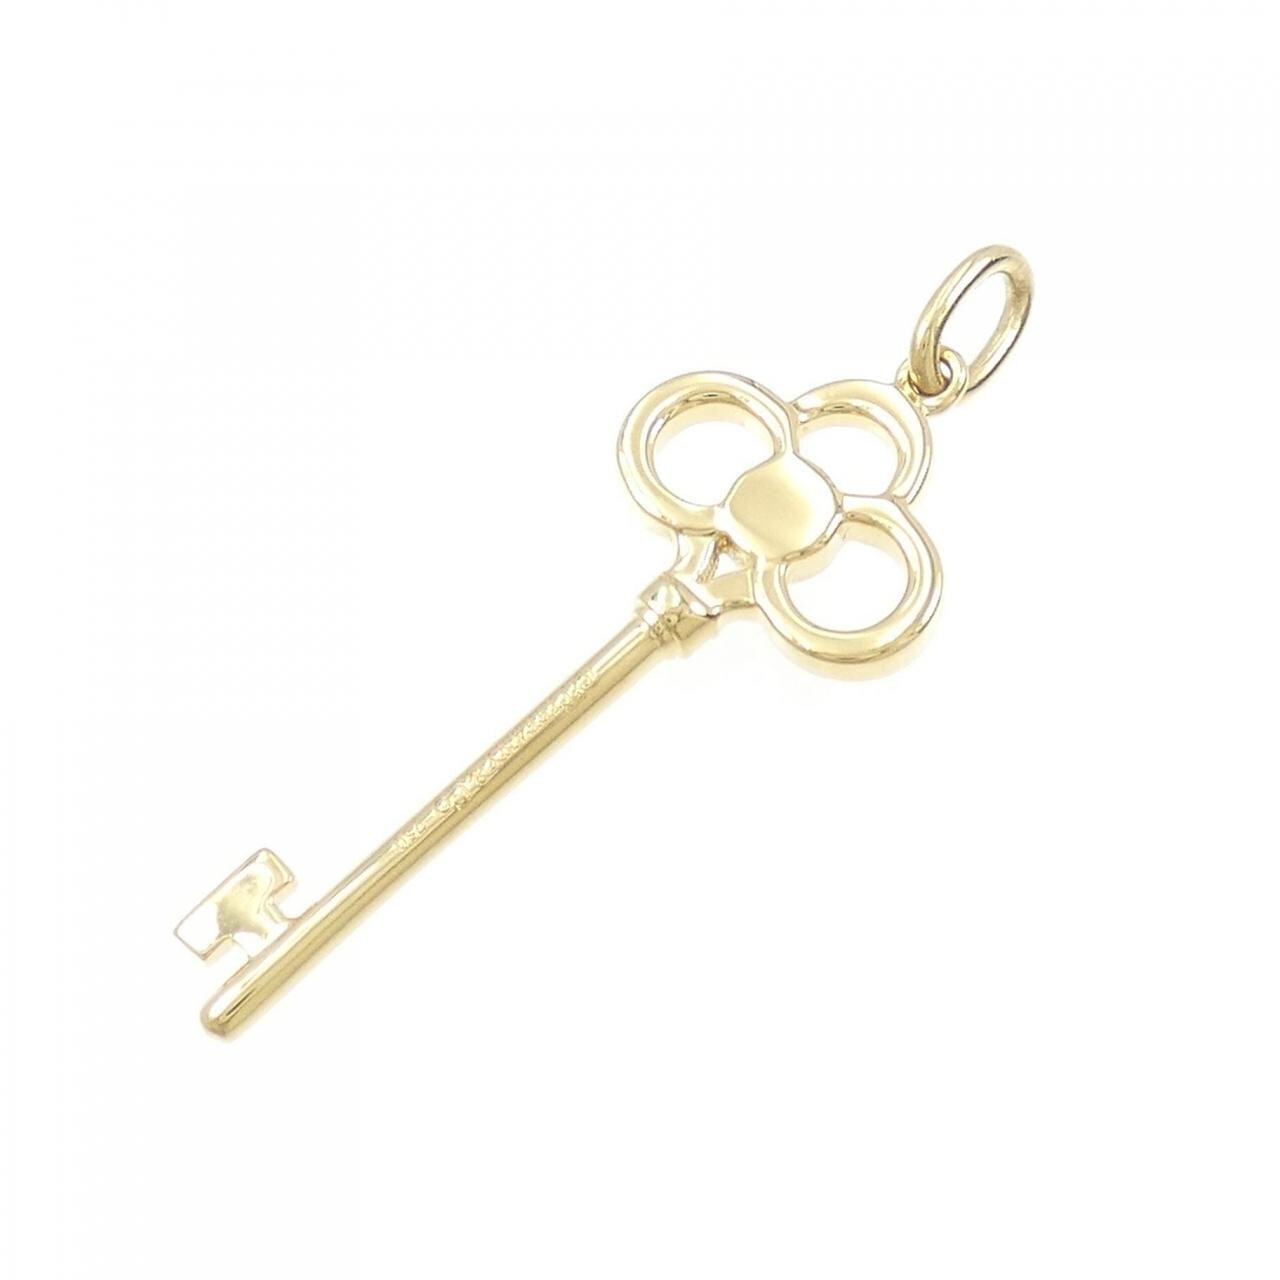 TIFFANY crown key pendant